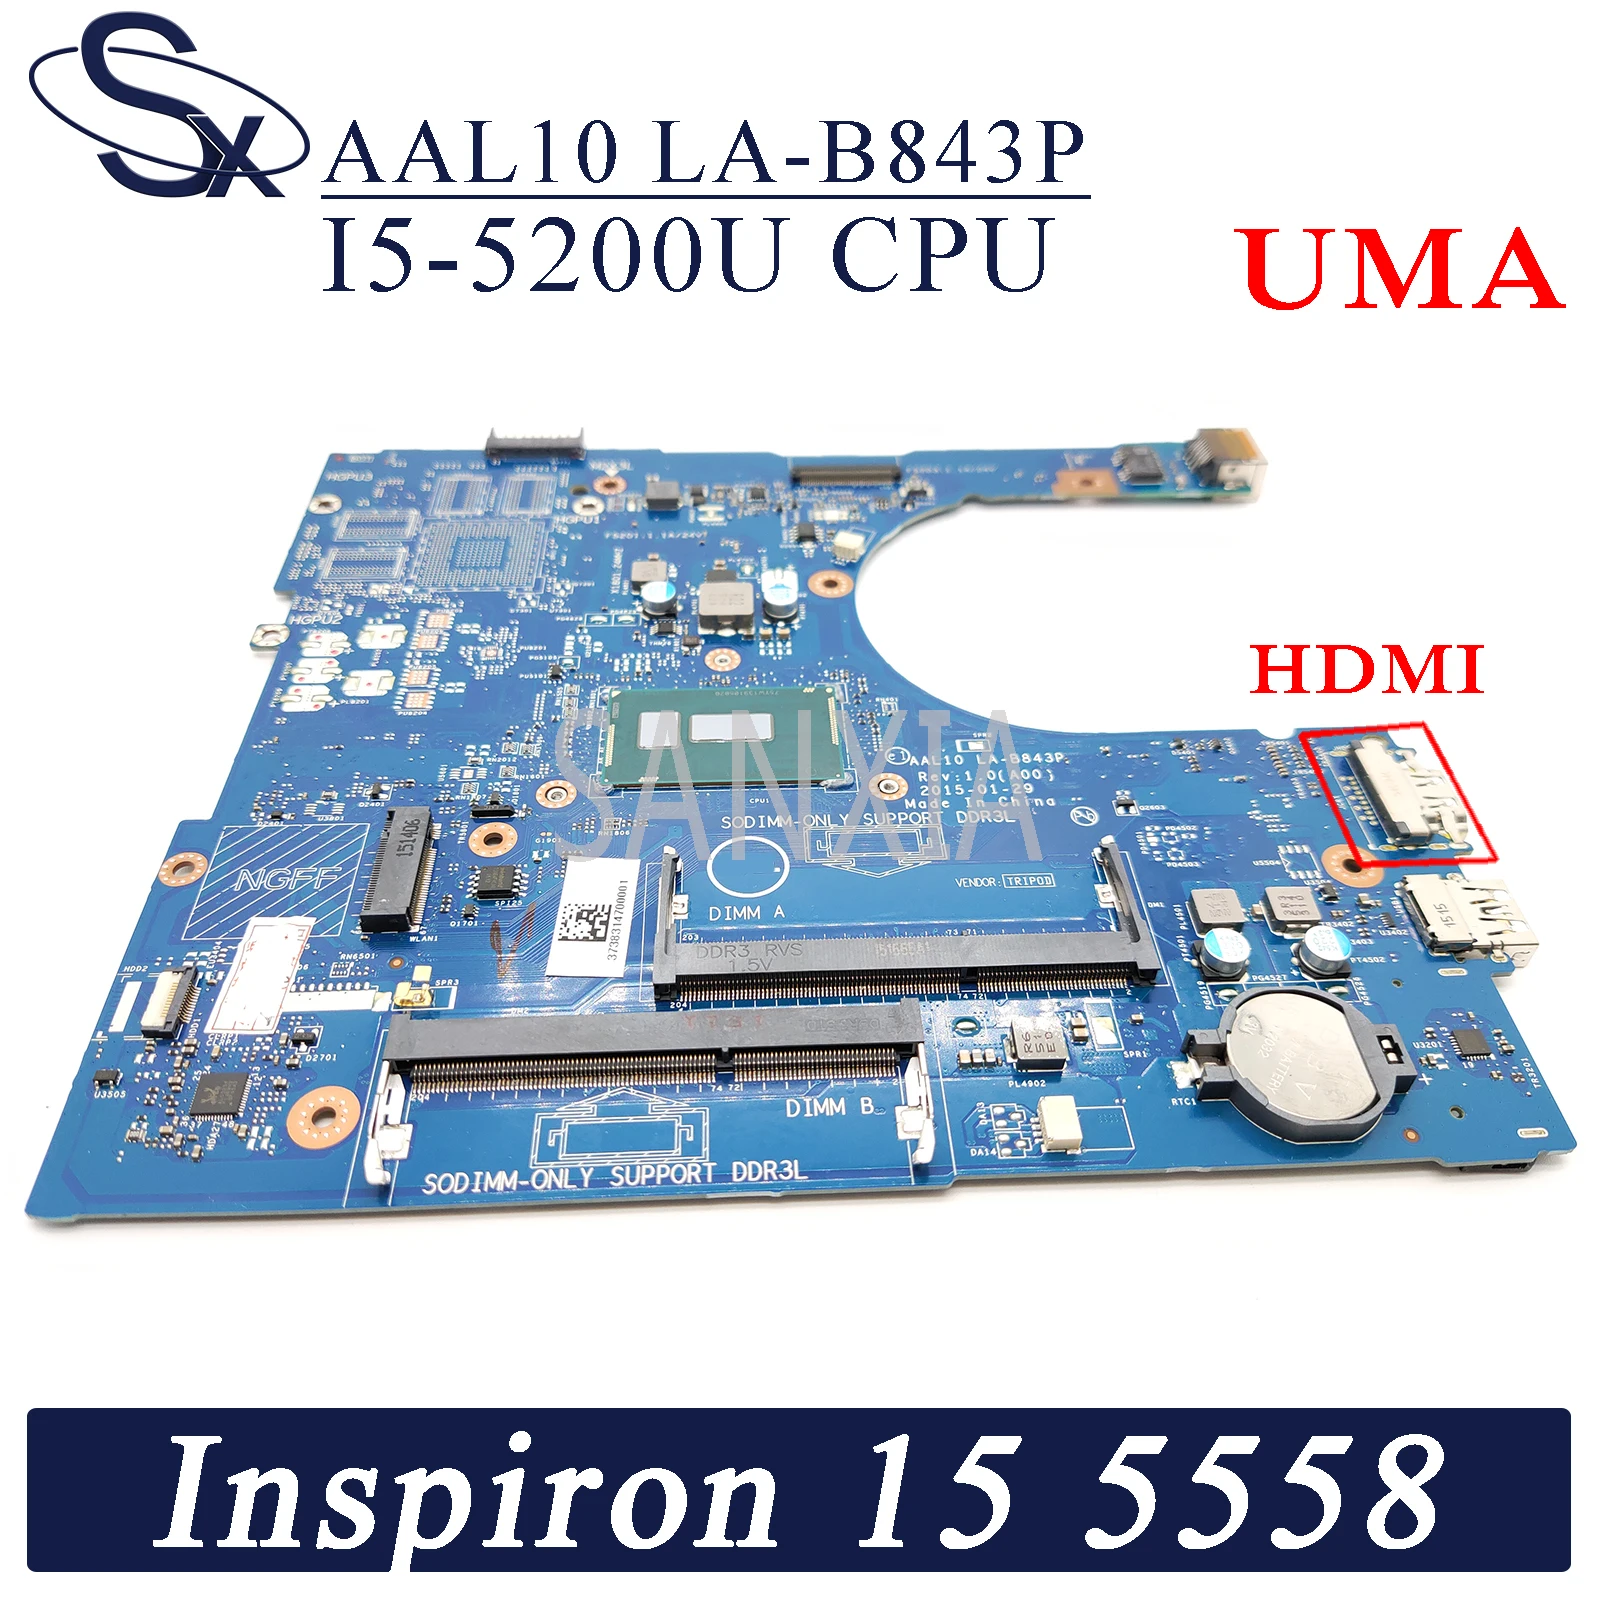 

KEFU AAL10 LA-B843P Laptop motherboard for Dell Inspiron 15-5558 14-5458 17-5758 original mainboard I5-5200U UMA